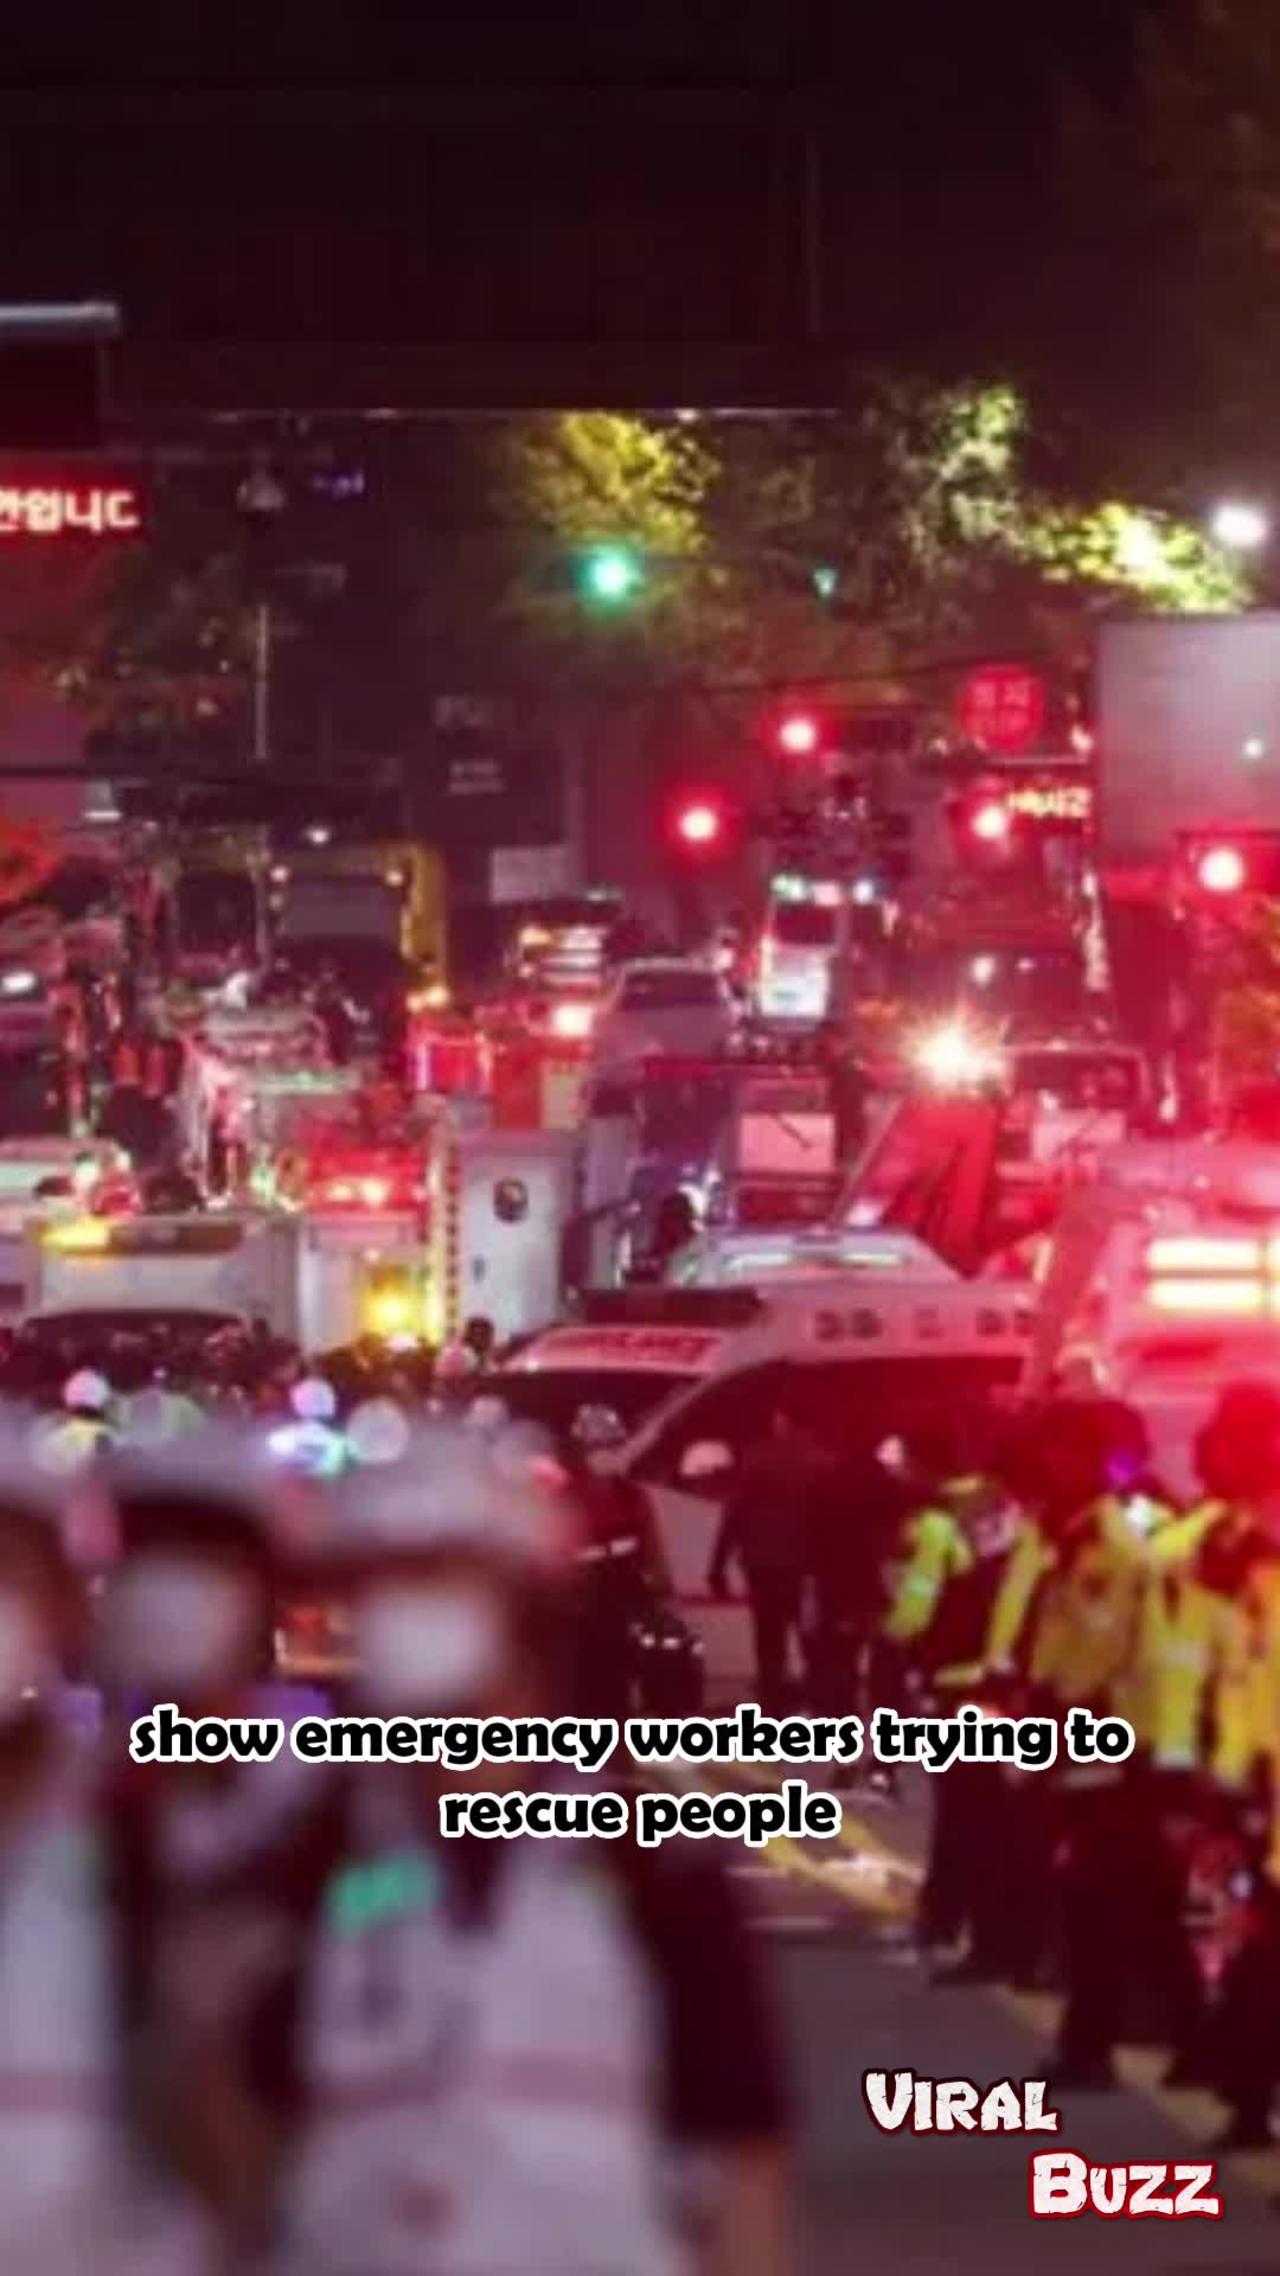 Seoul Stampede Crowd Crush Halloween Incident